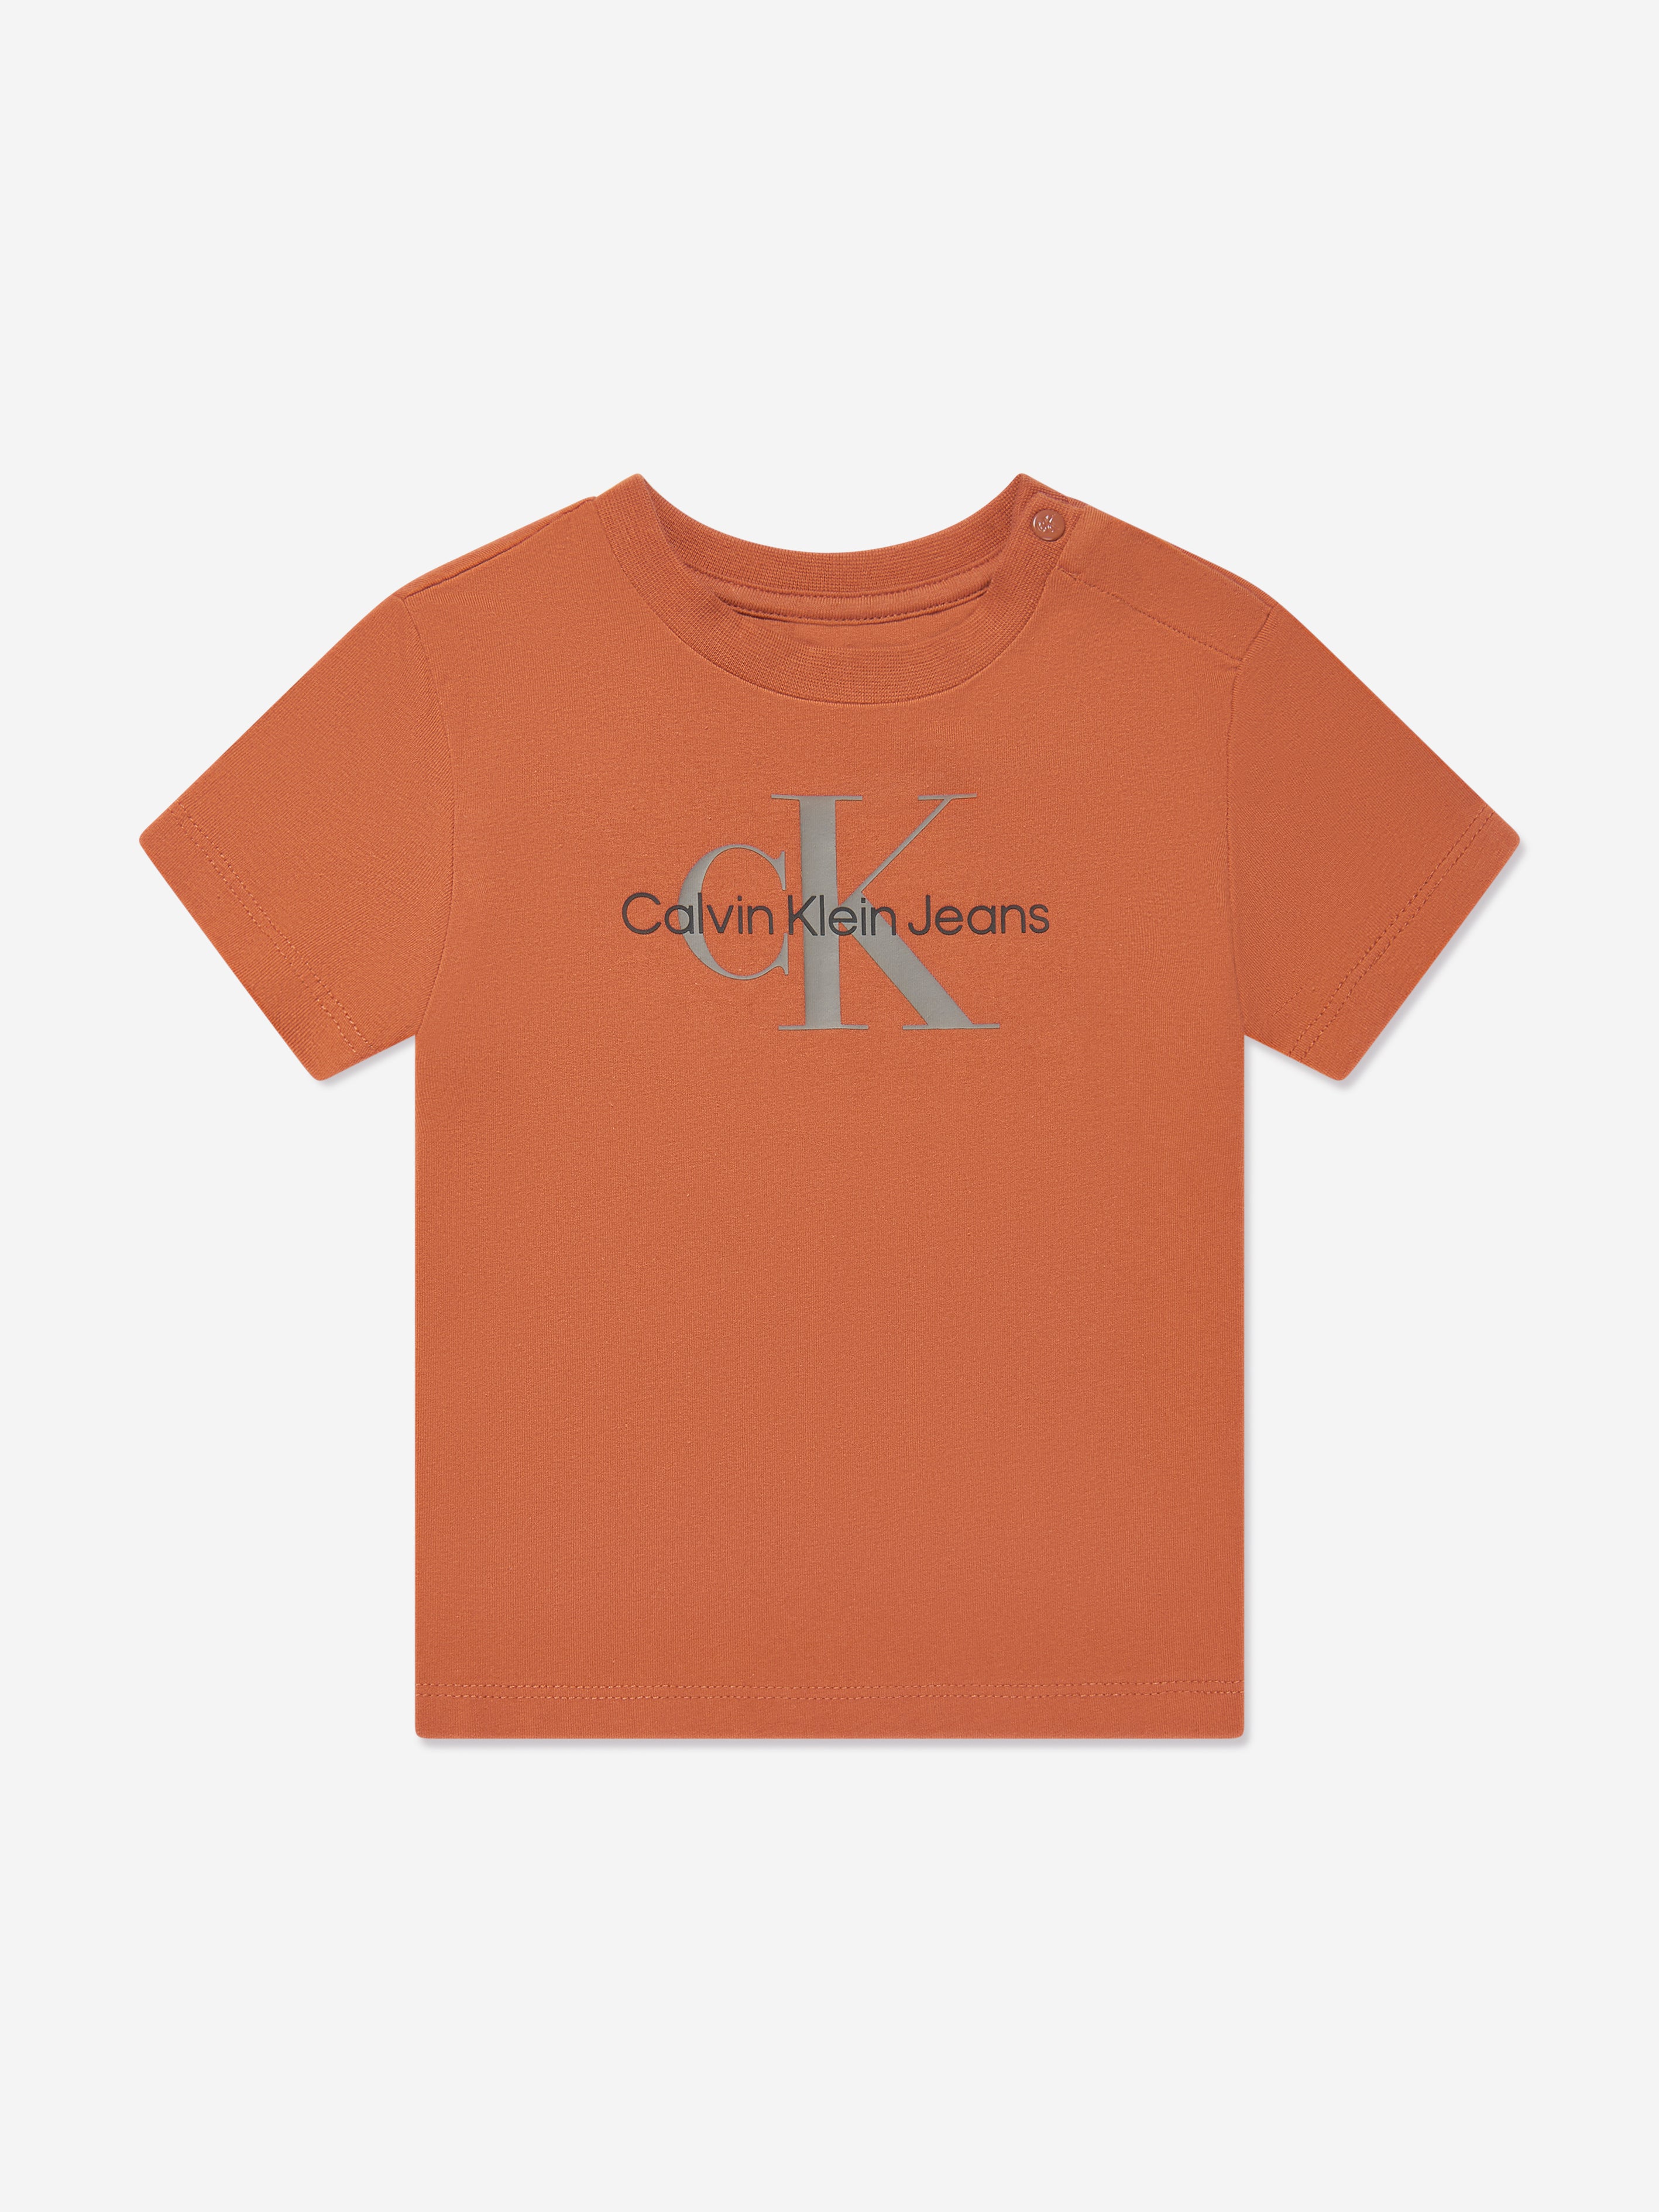 Klein Monogram Jeans in Childsplay | Baby Clothing Calvin T-Shirt Auburn